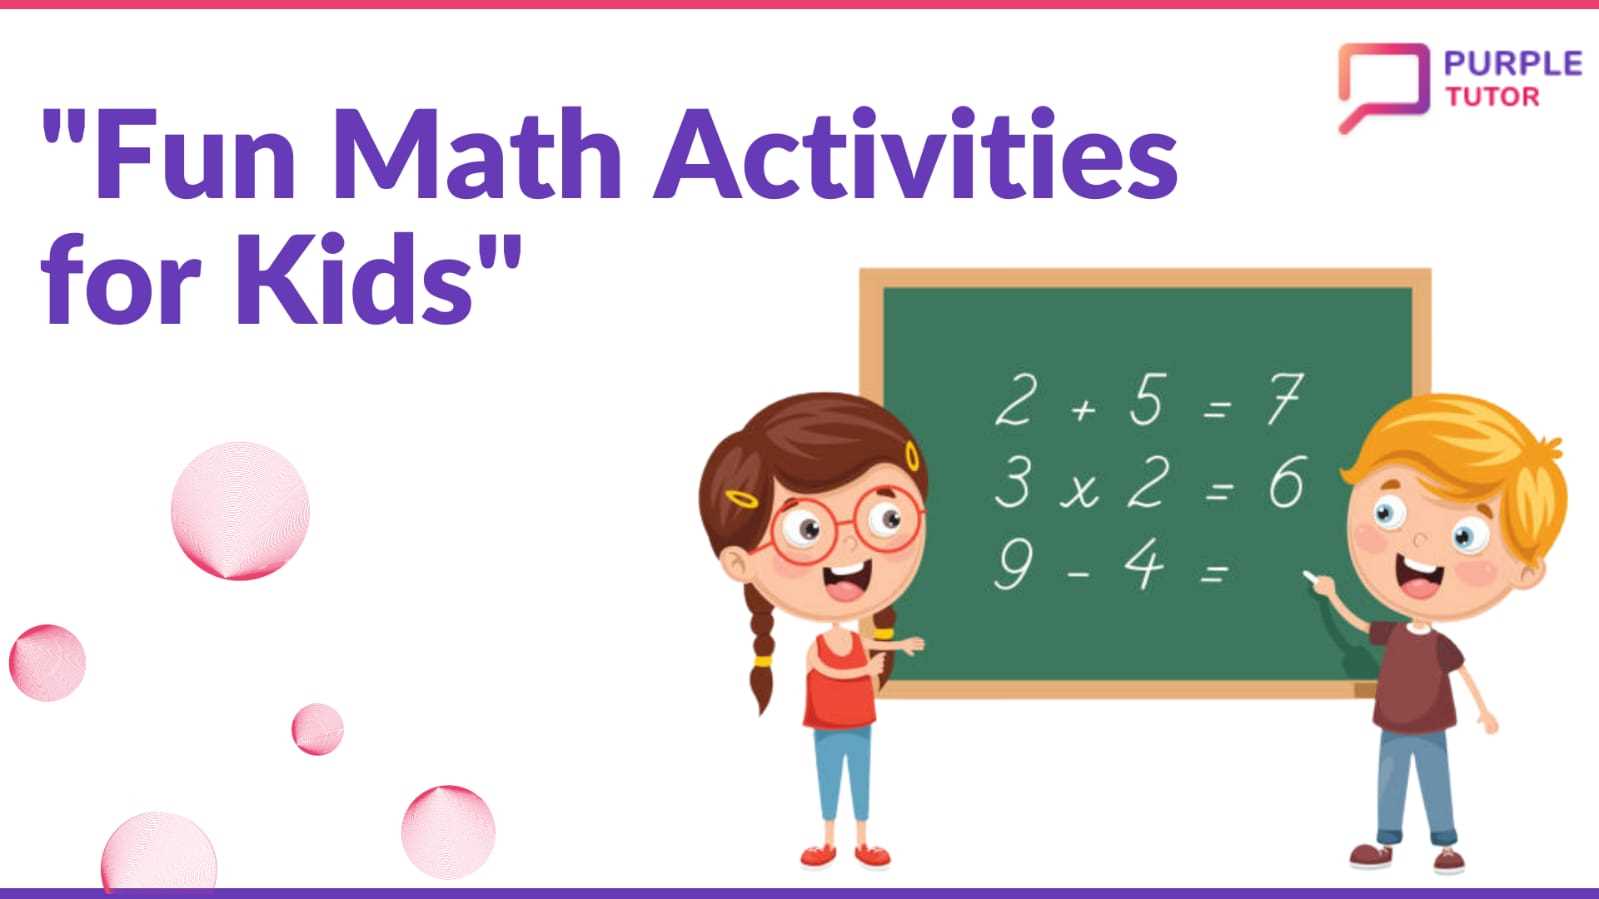 Fun math activities for kids